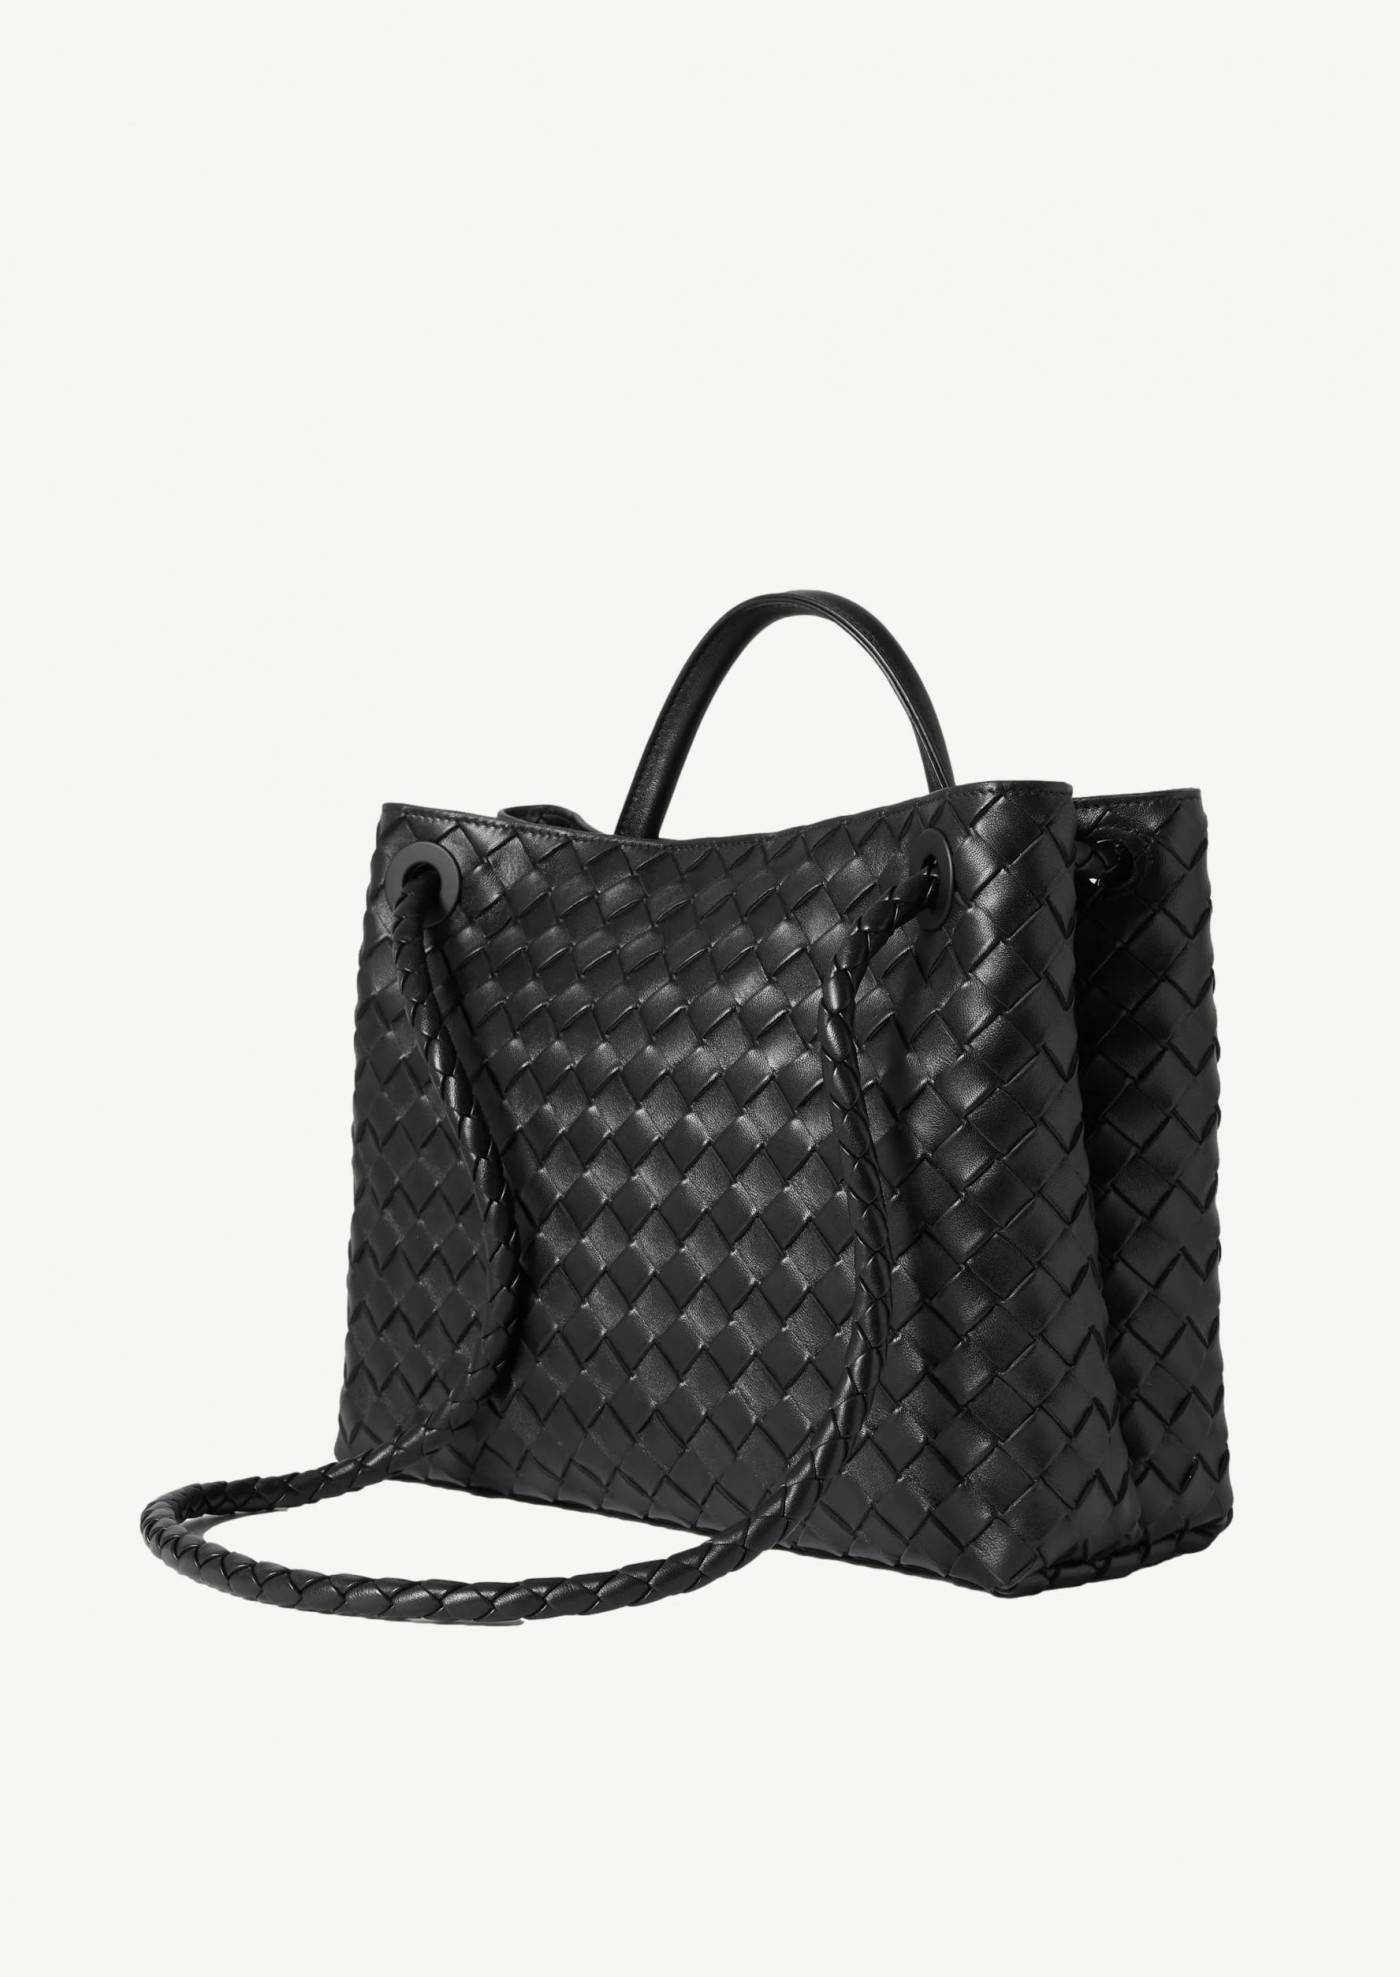 Andiamo Medium leather handbag - Black